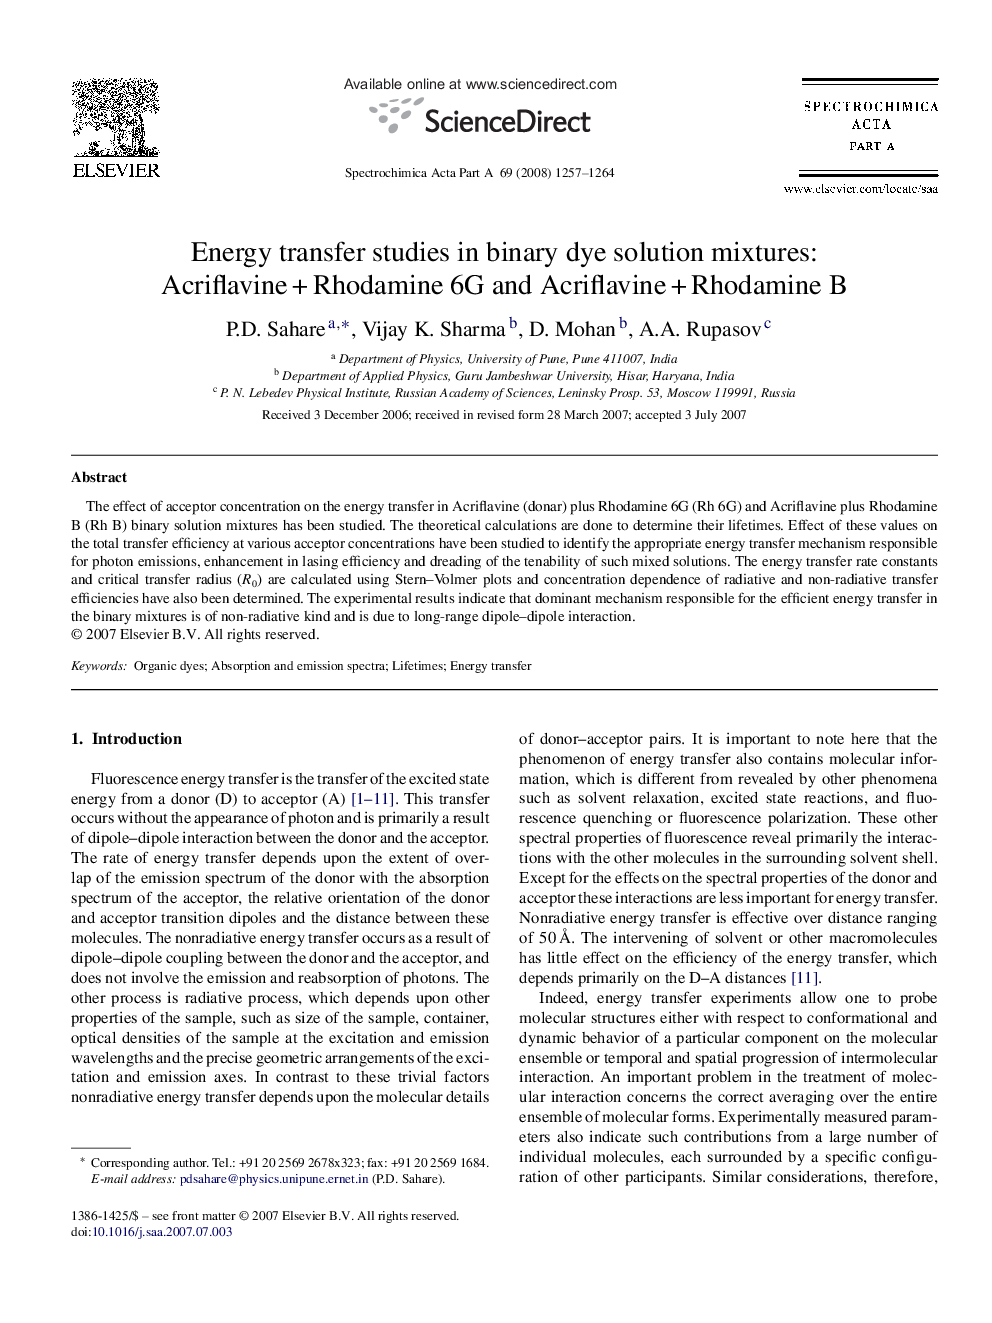 Energy transfer studies in binary dye solution mixtures: Acriflavine + Rhodamine 6G and Acriflavine + Rhodamine B